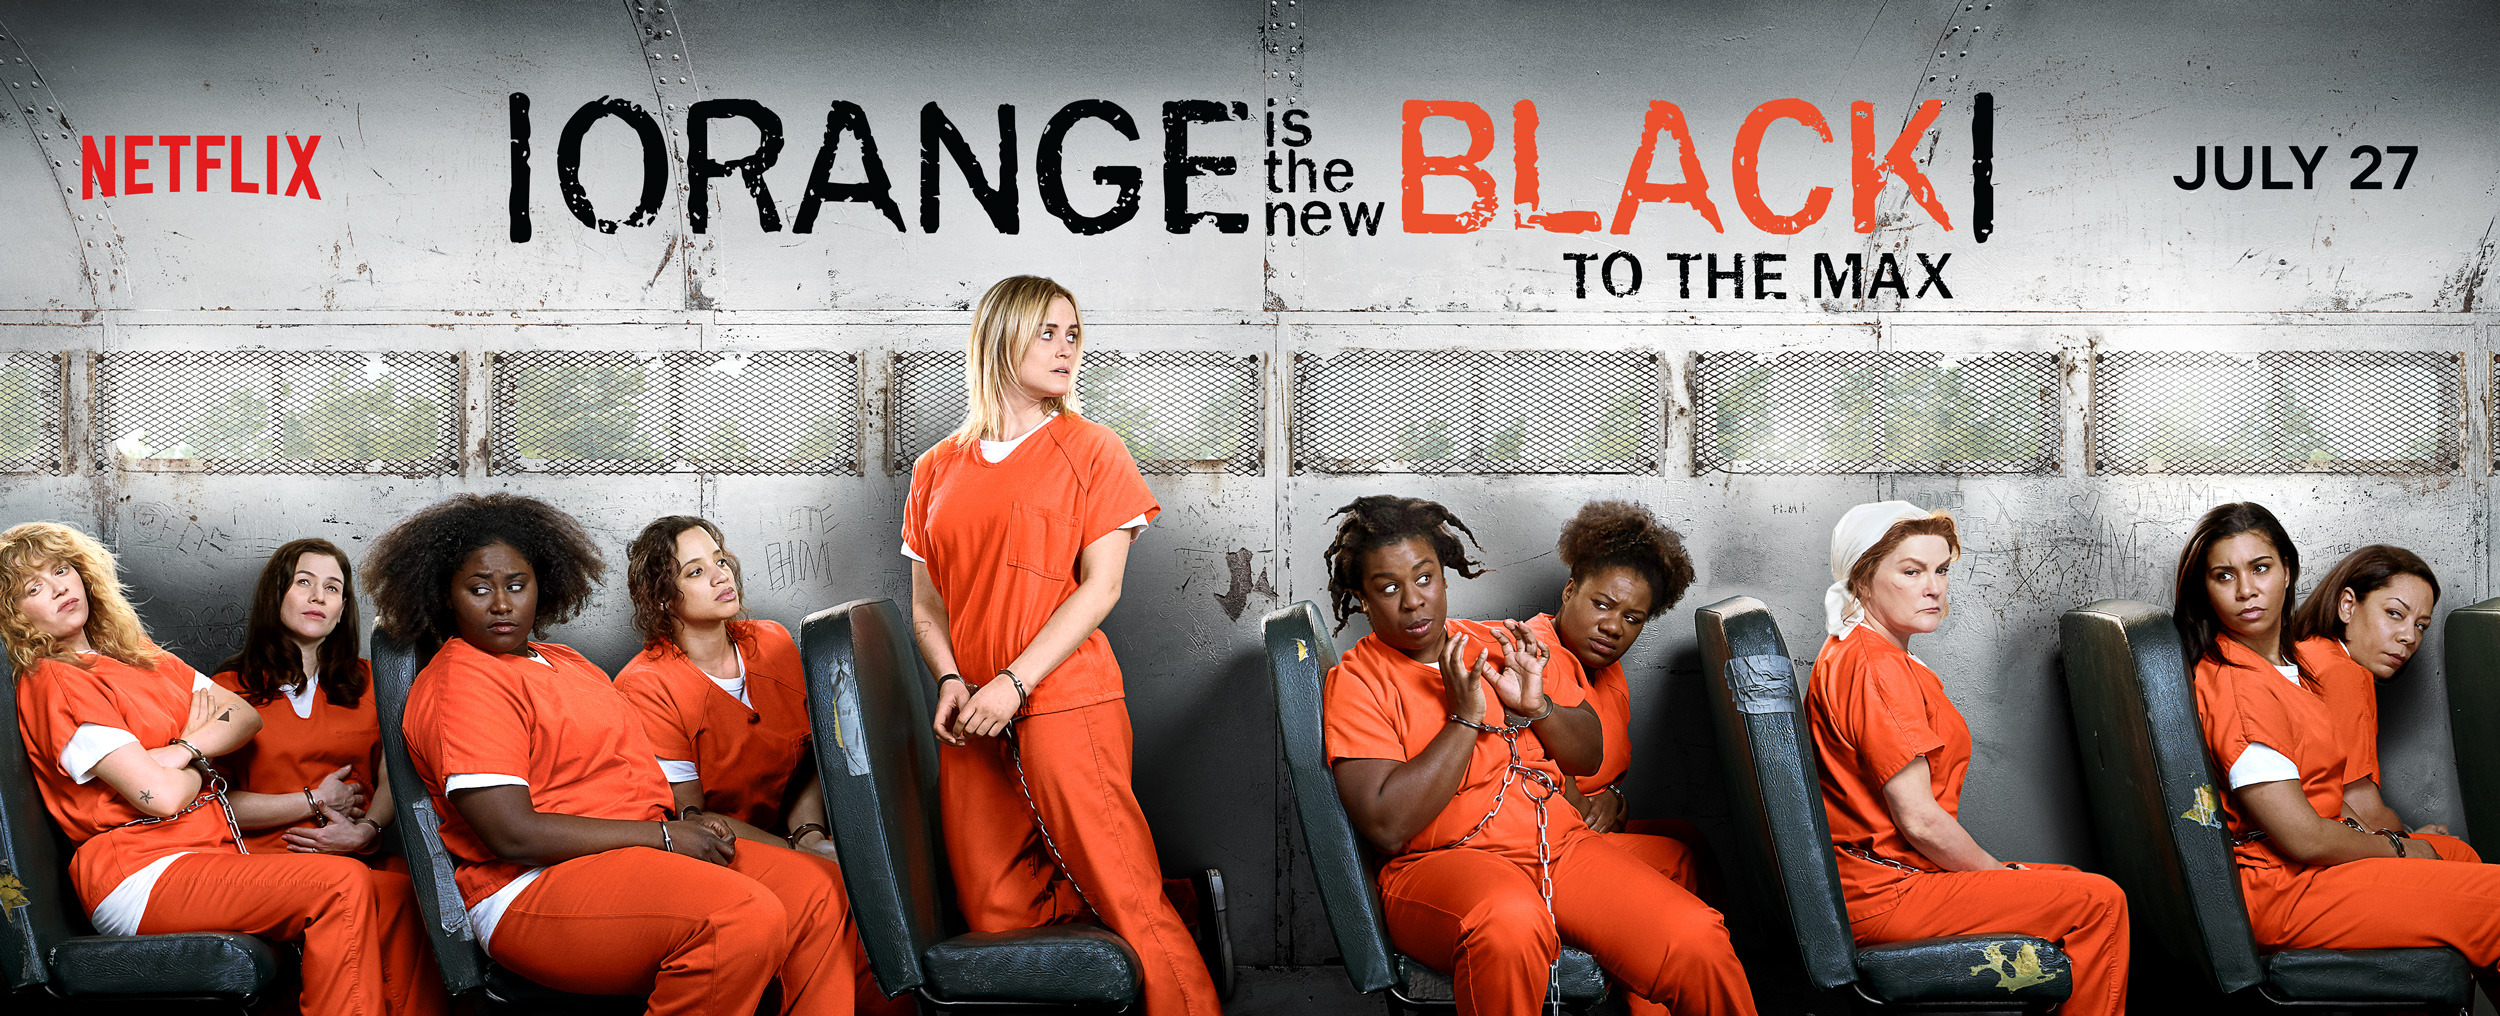 Mega Sized Movie Poster Image for Orange Is the New Black (#73 of 81)